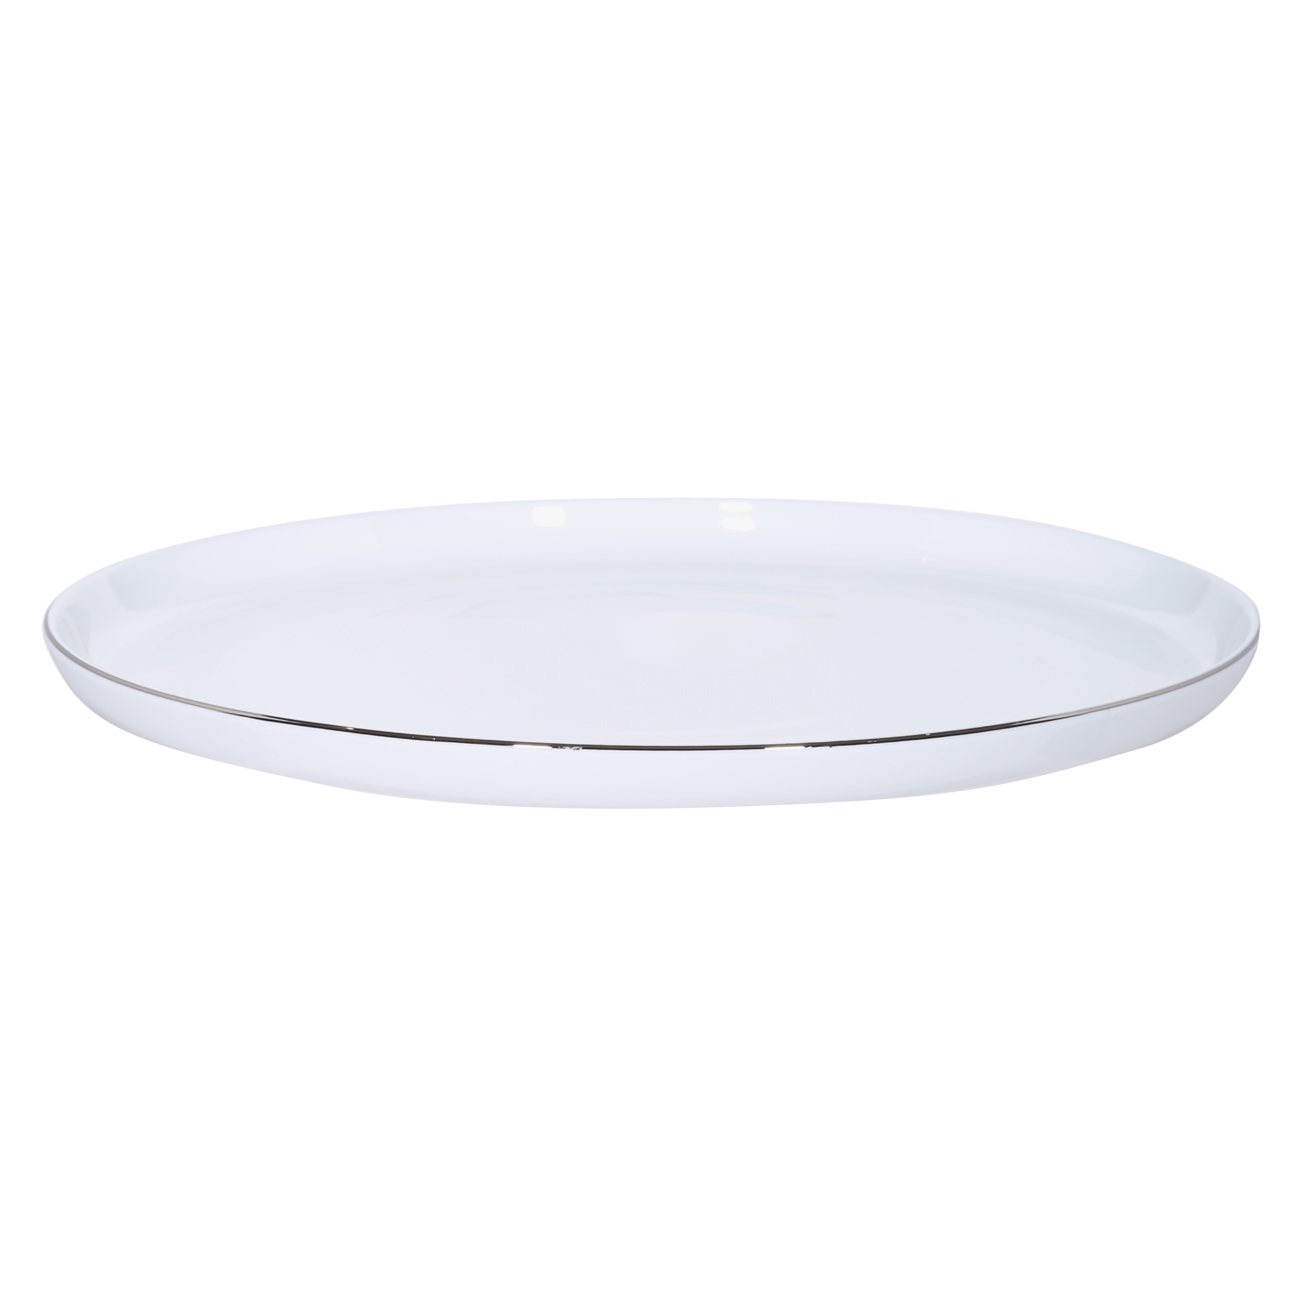 Dining plate, 26 cm, porcelain F, white, Ideal silver изображение № 2